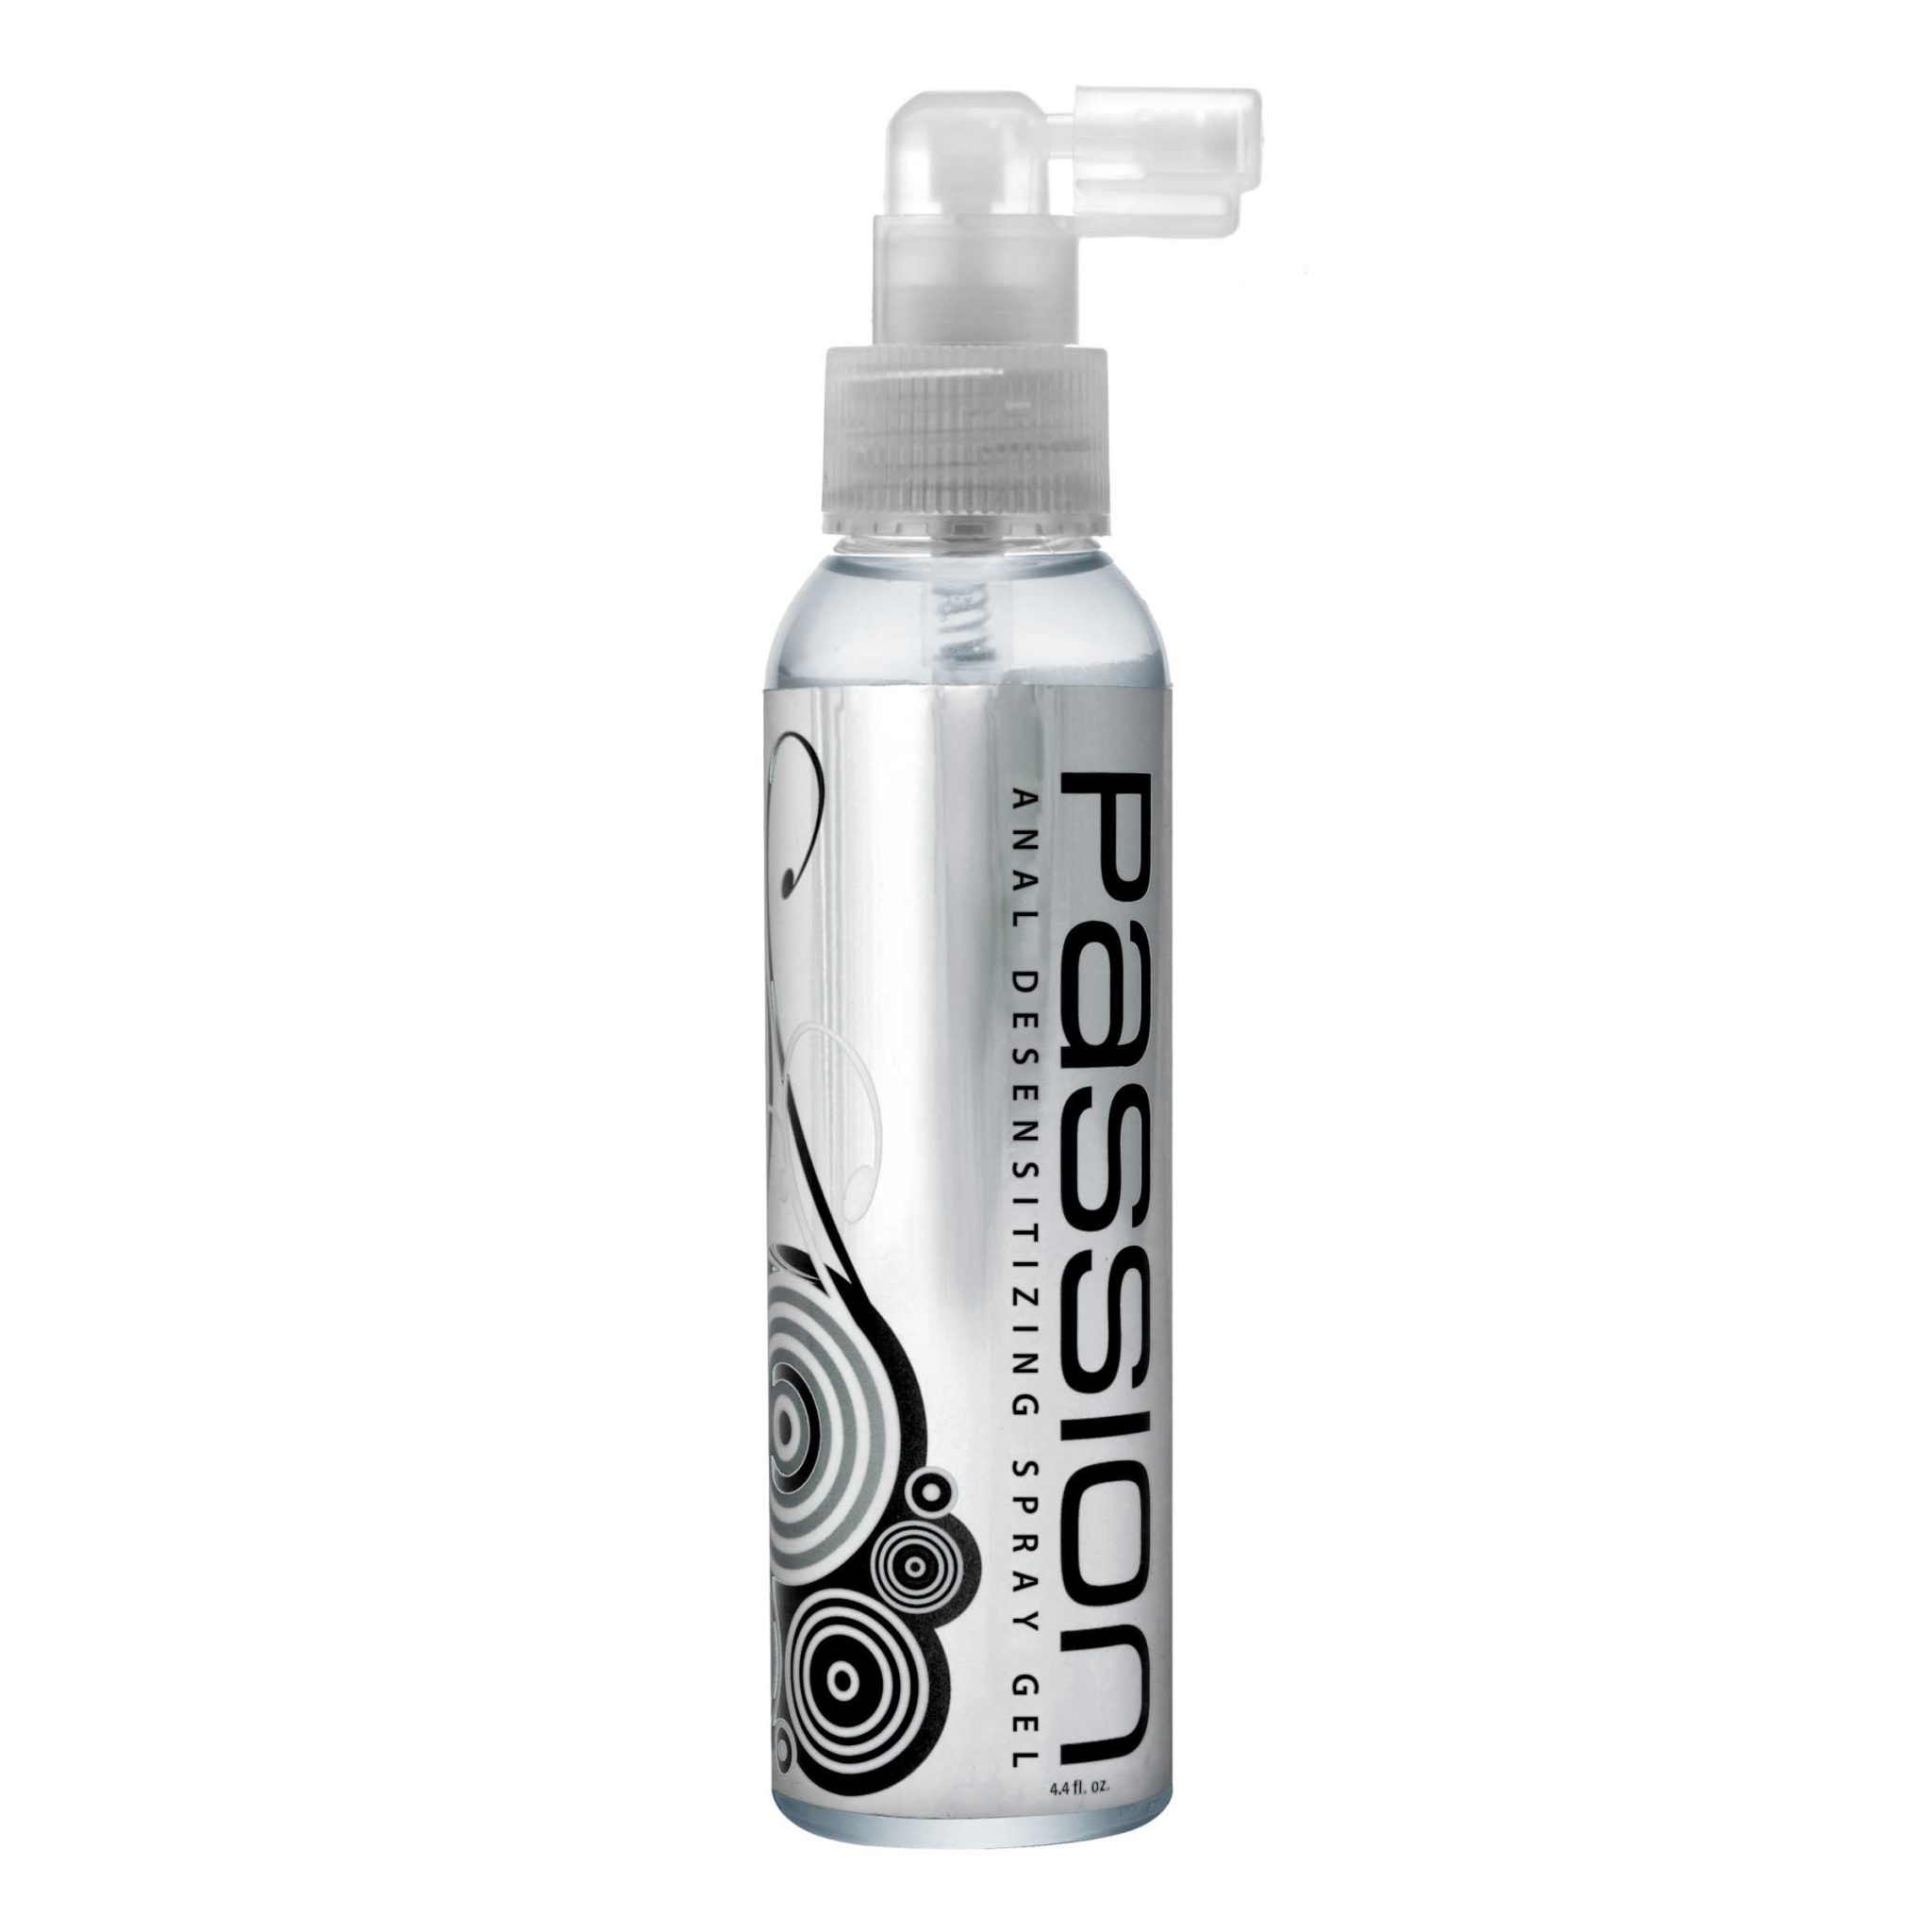 Passion Extra Strength Anal Desensitizing Spray Gel – 4.4 oz